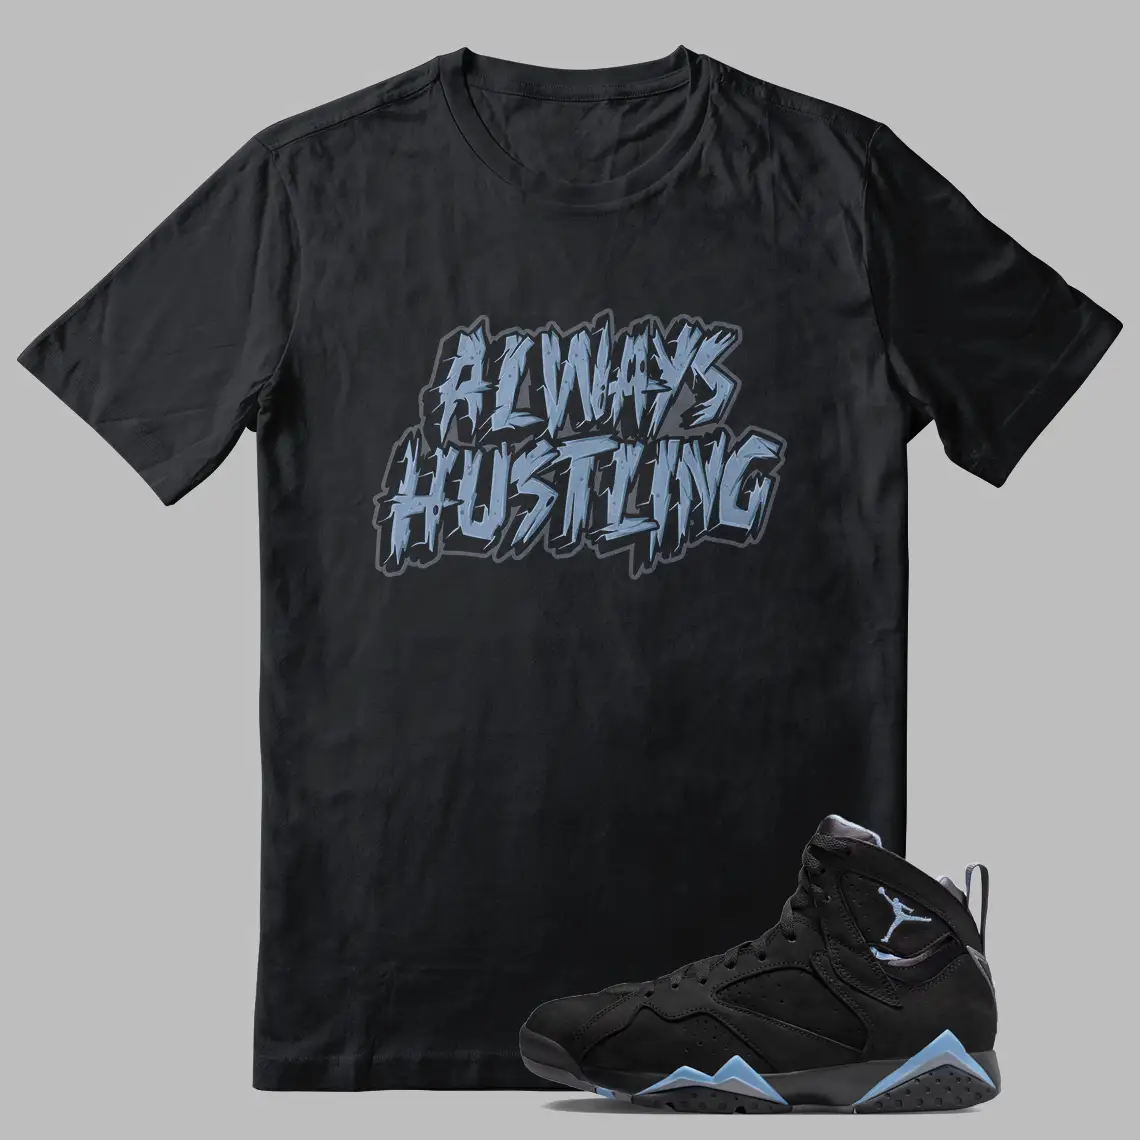 Jordan 7 Chambray Shirt - Always Hustling Graphic